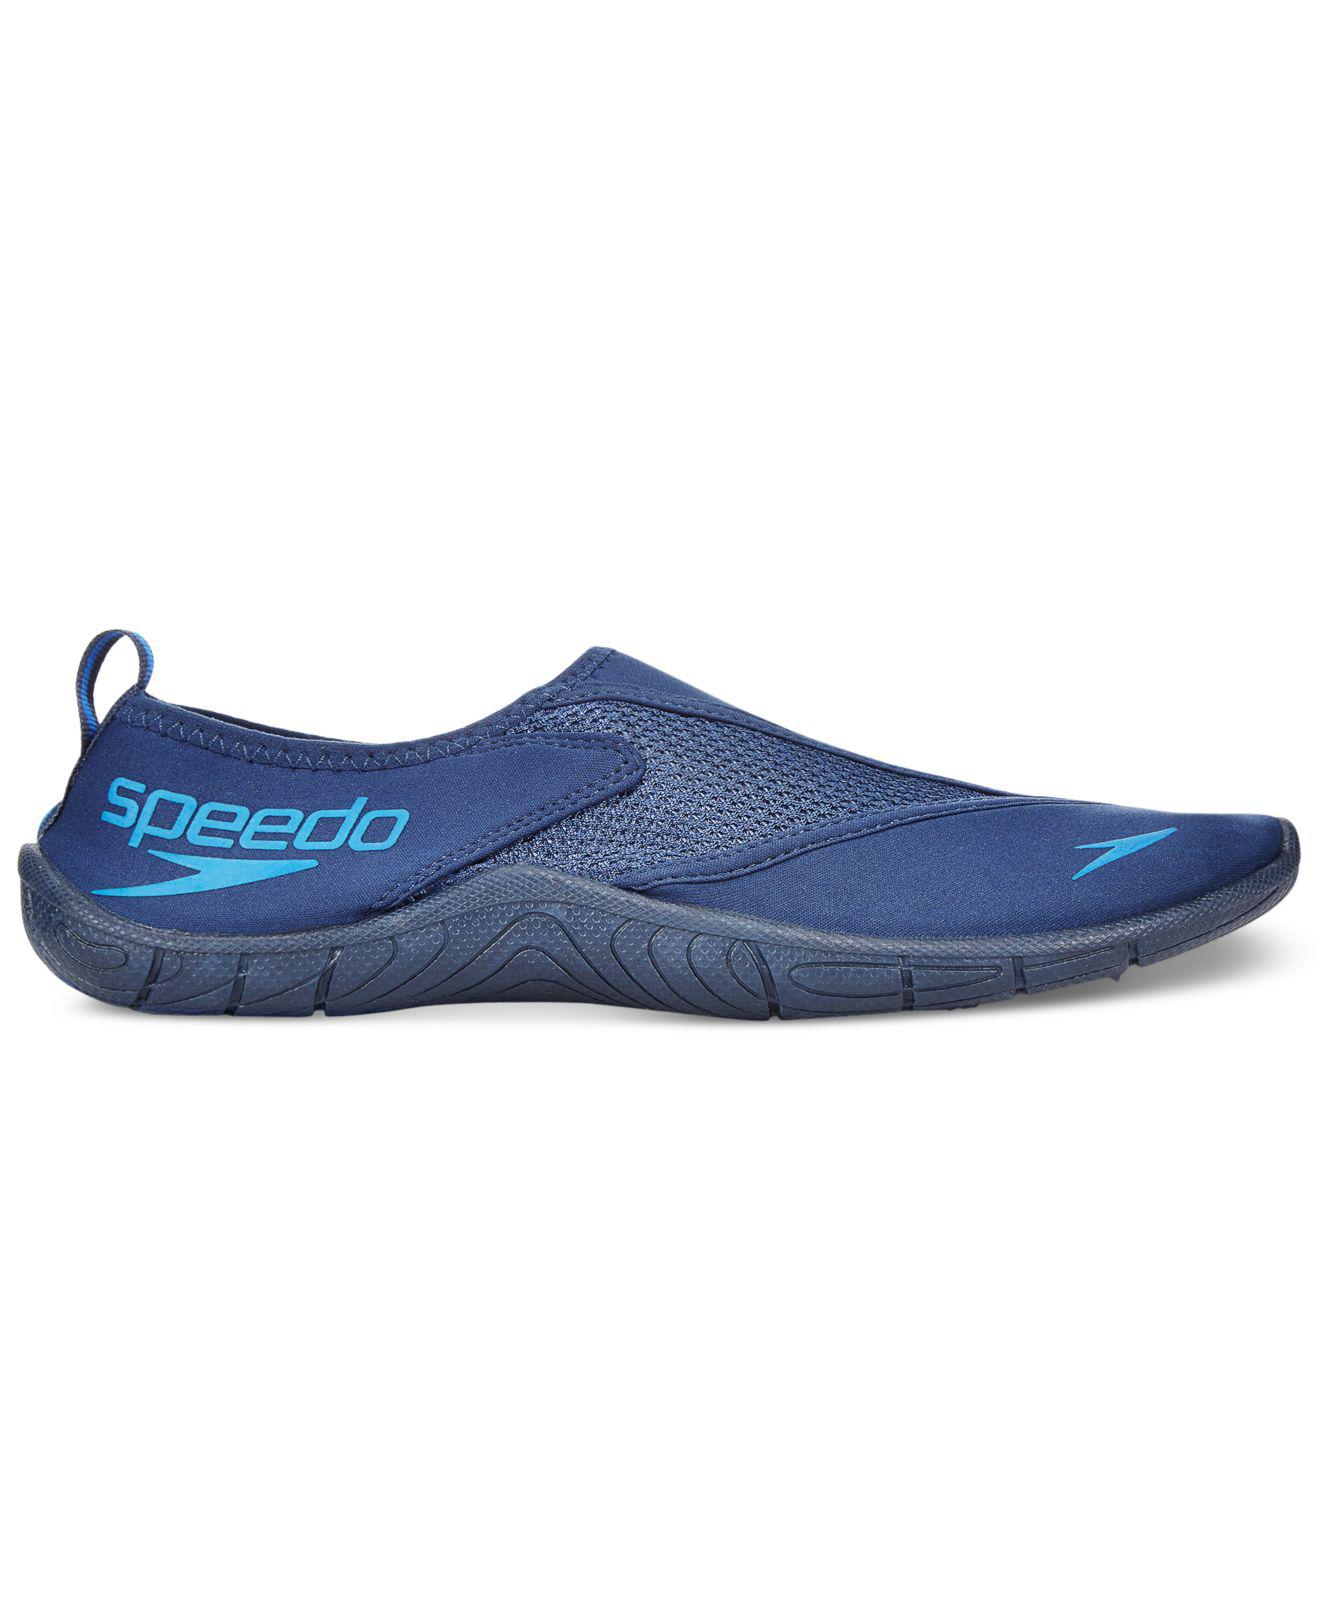 Speedo Mens Water Shoe Surfwalker Pro 3.0